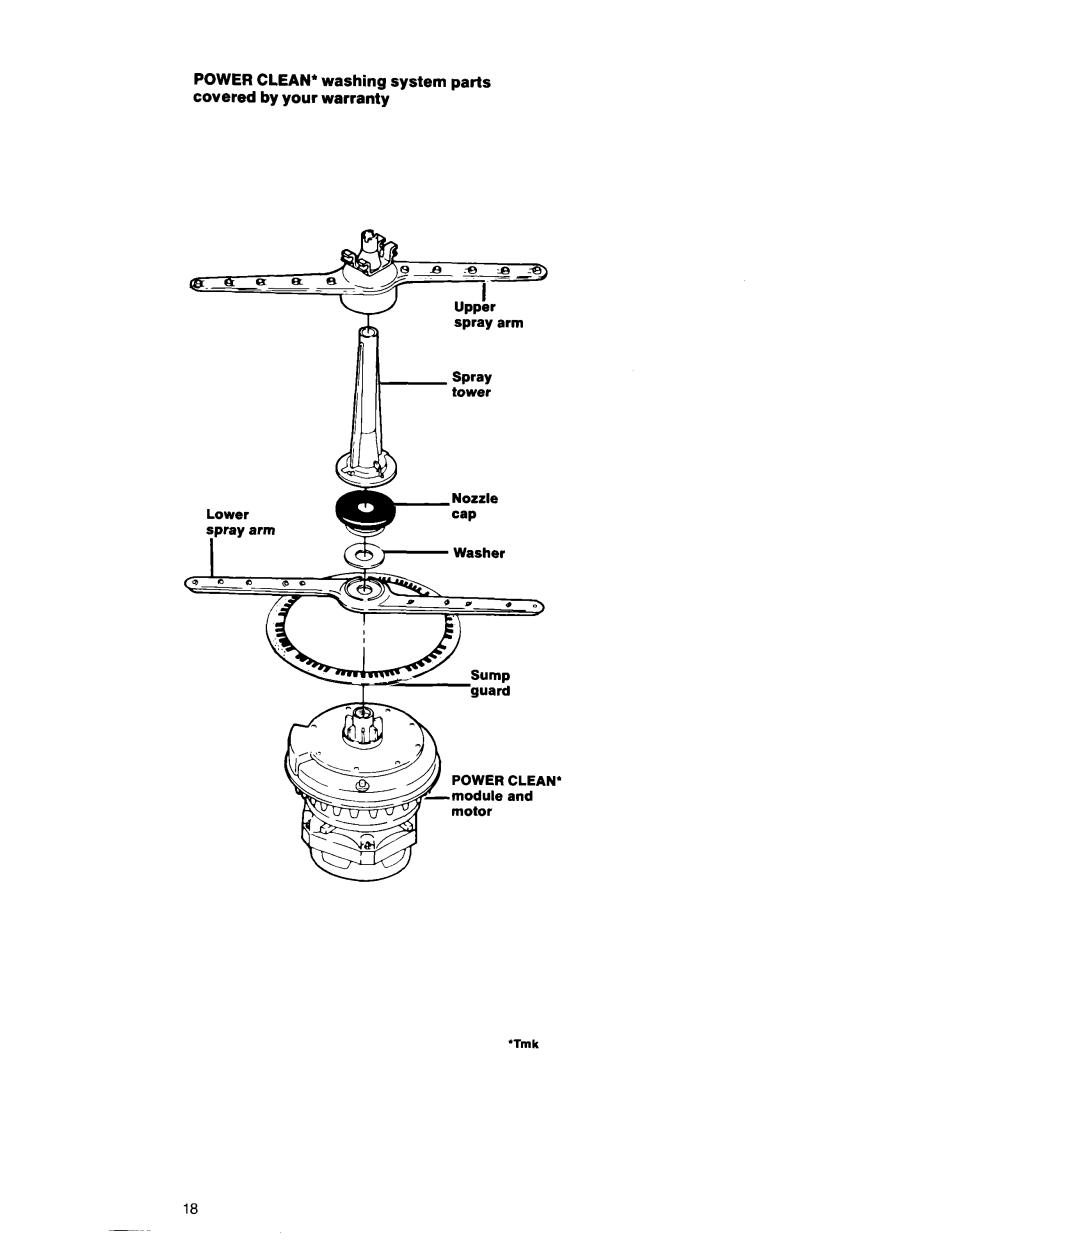 Whirlpool DU8950XT manual spray arm, guard POWER CLEAN’ module and motor, Nozzle, Washer, ‘Tmk, CJ ====Tz 